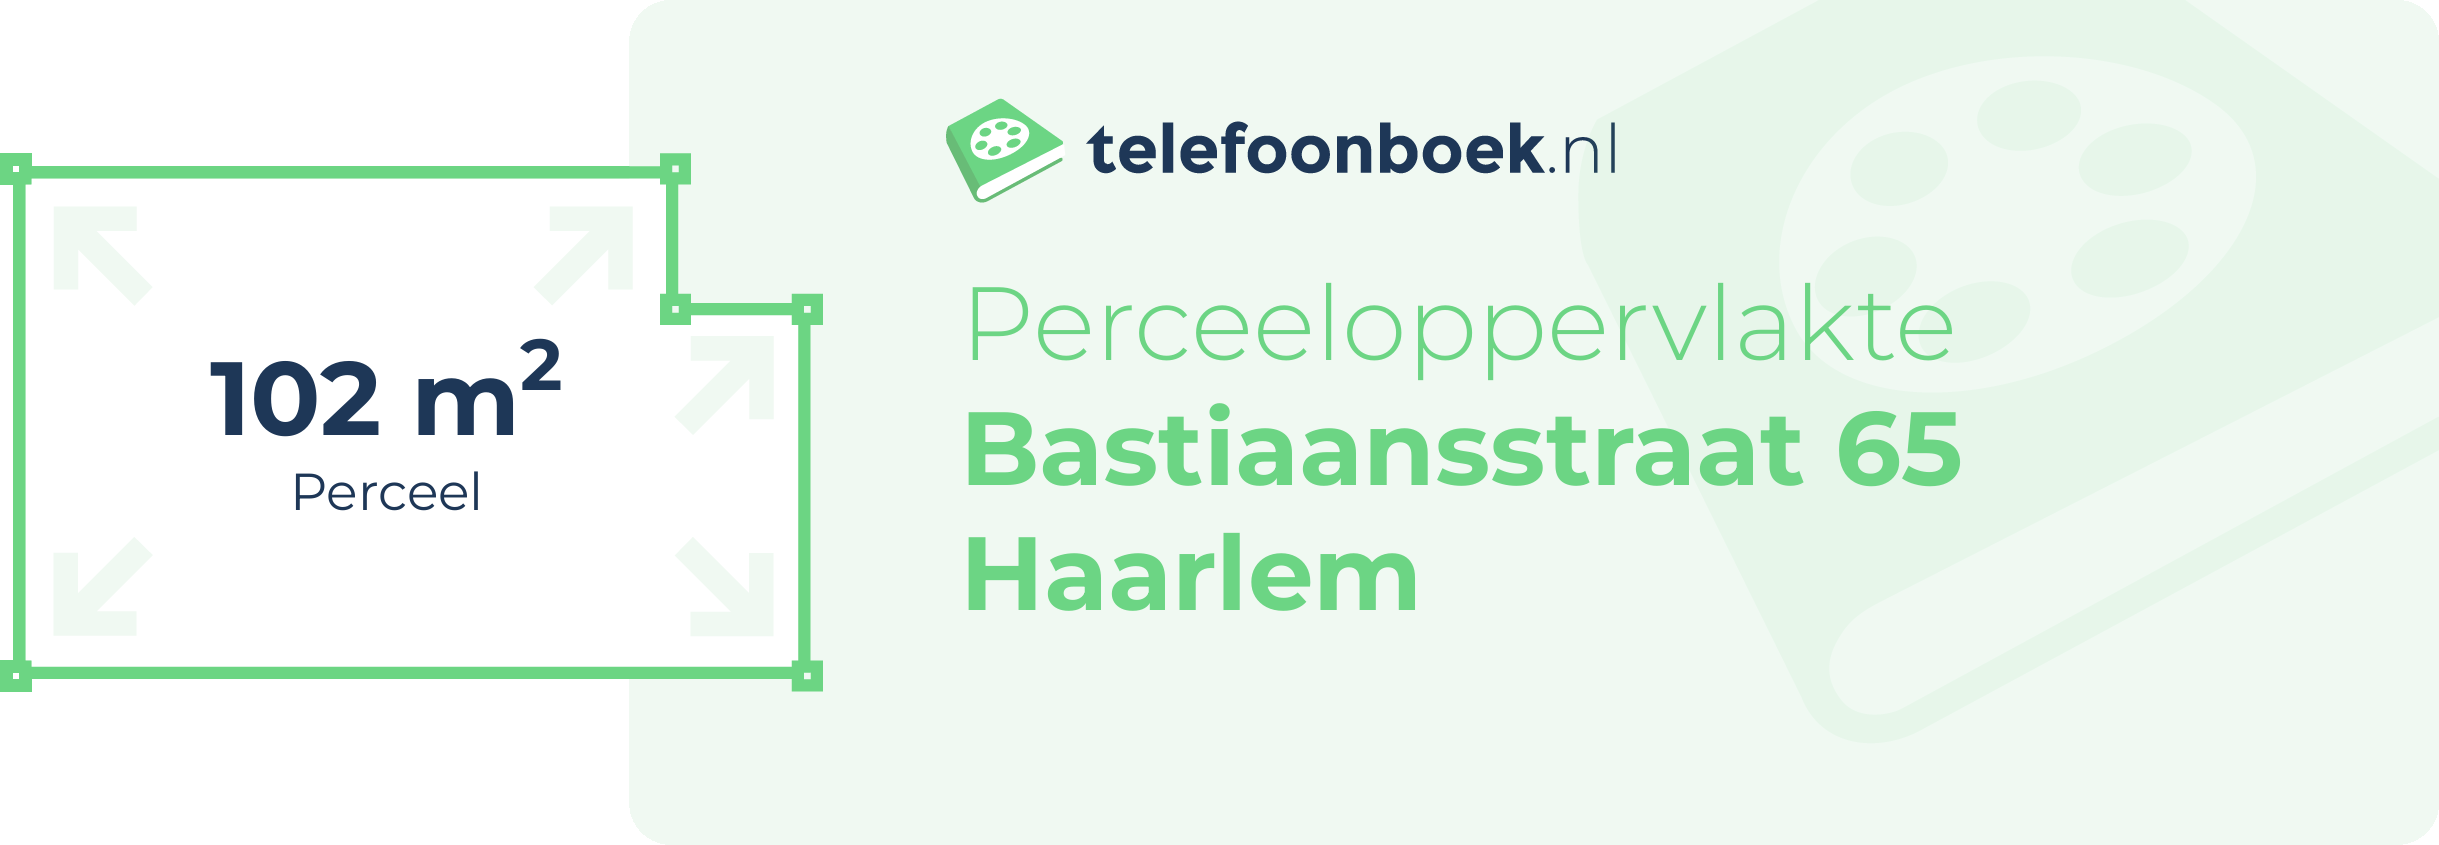 Perceeloppervlakte Bastiaansstraat 65 Haarlem